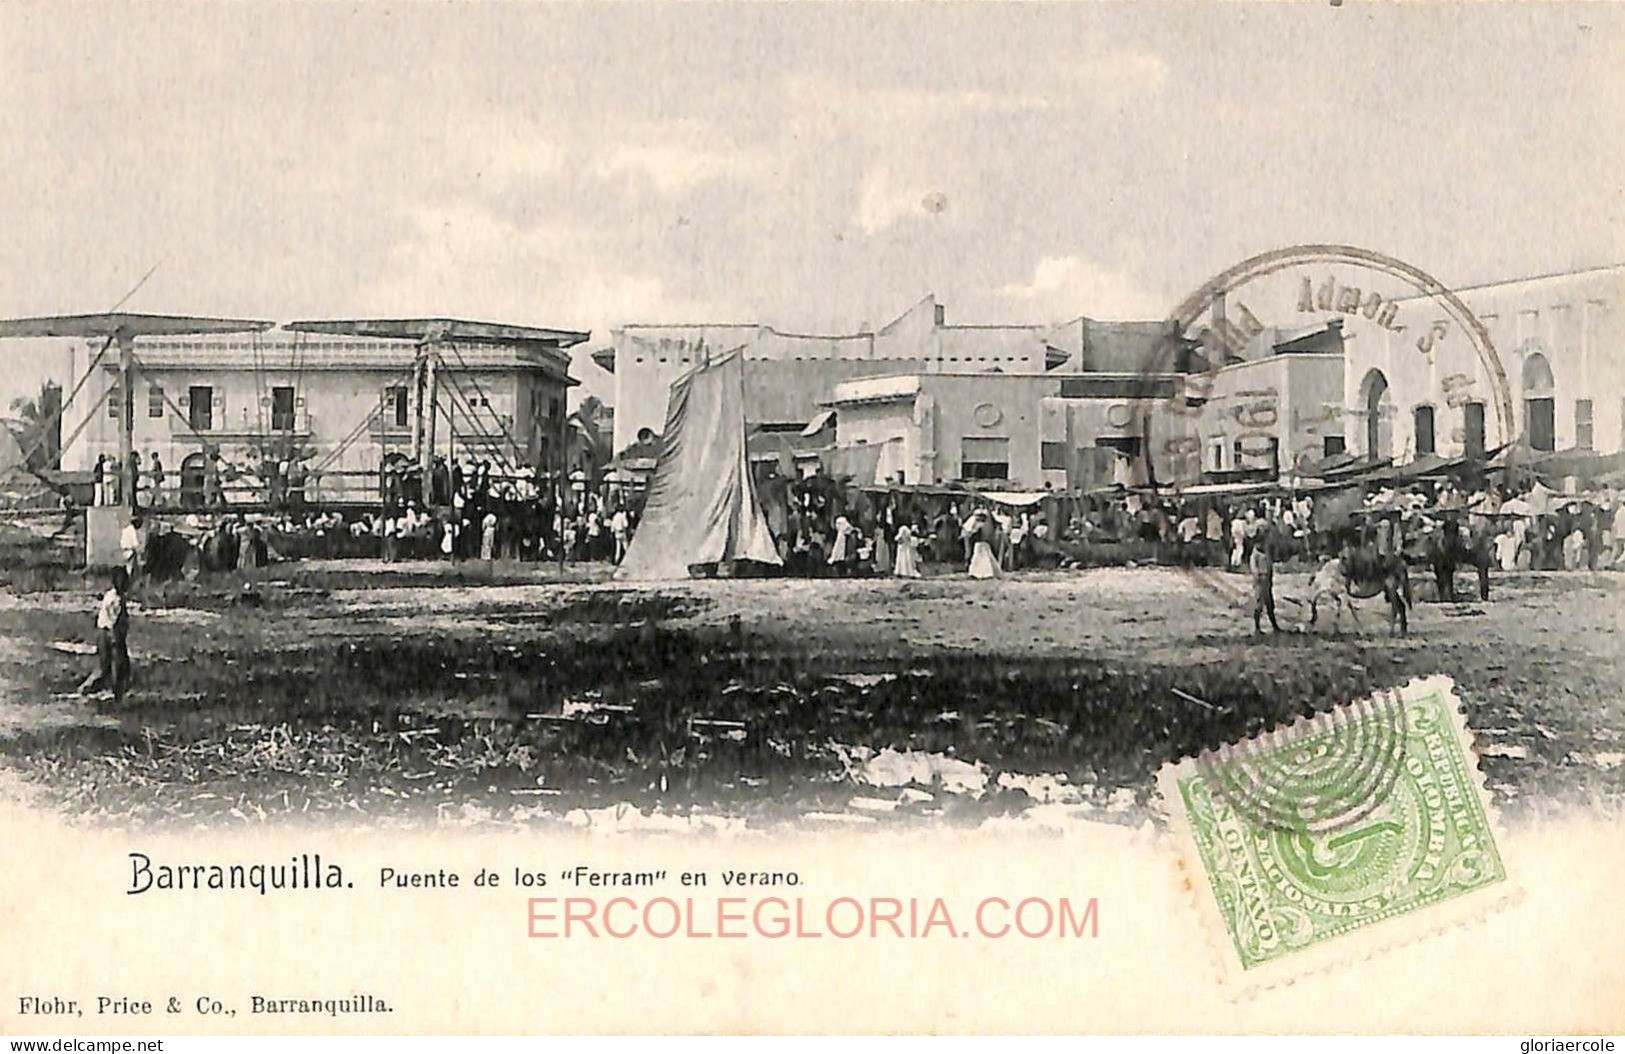 Ac8444 - COLOMBIA -  Vintage Postcard - Barranquilla - Colombie